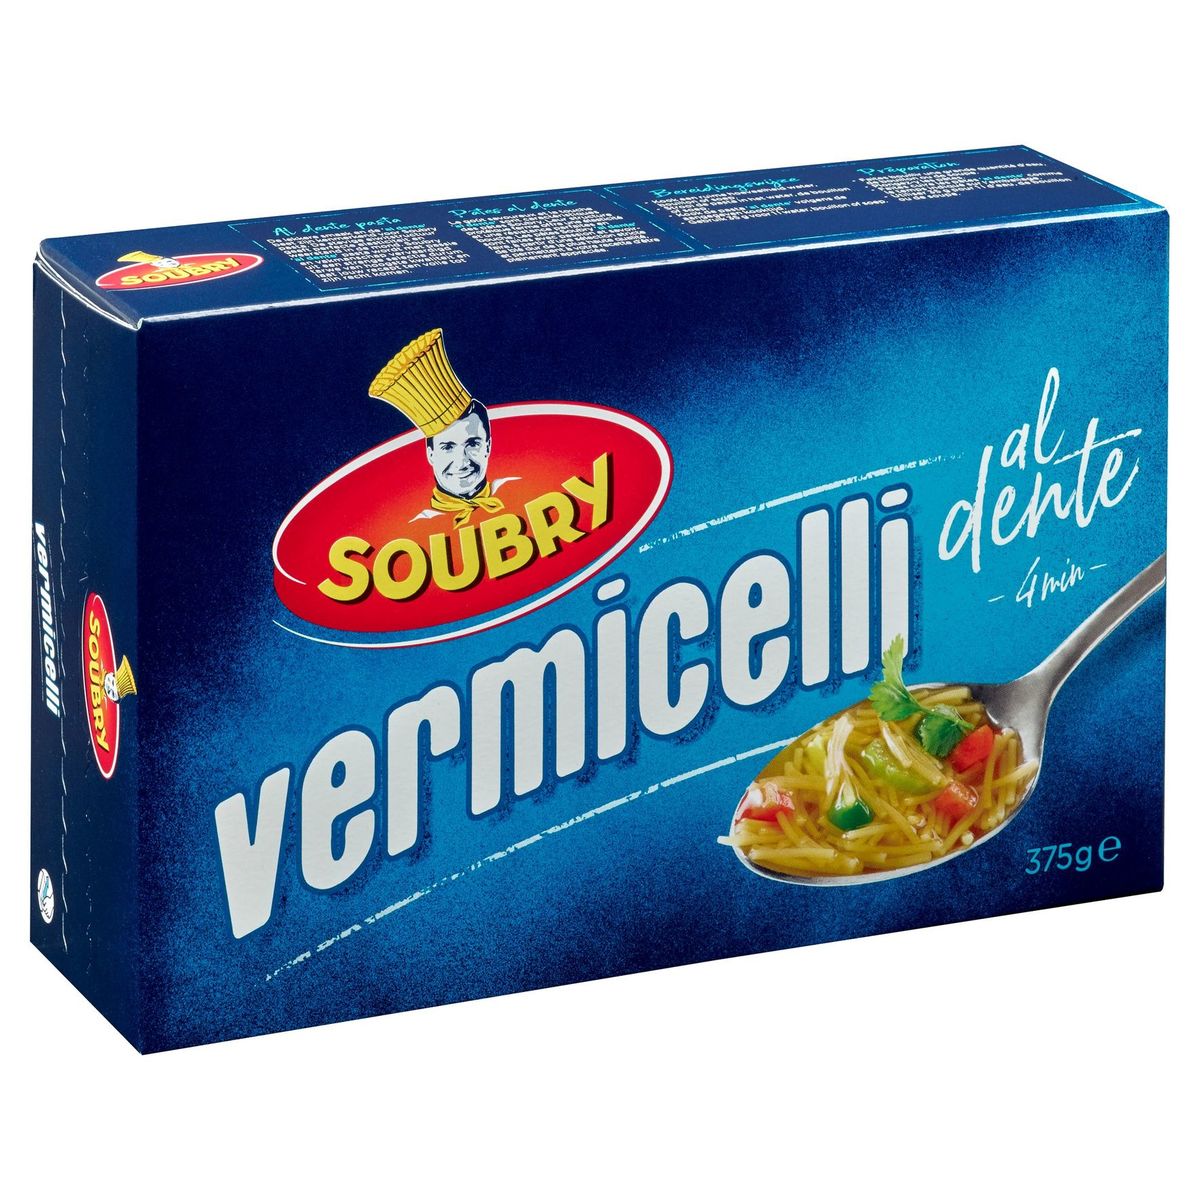 Soubry Vermicelli 375 g